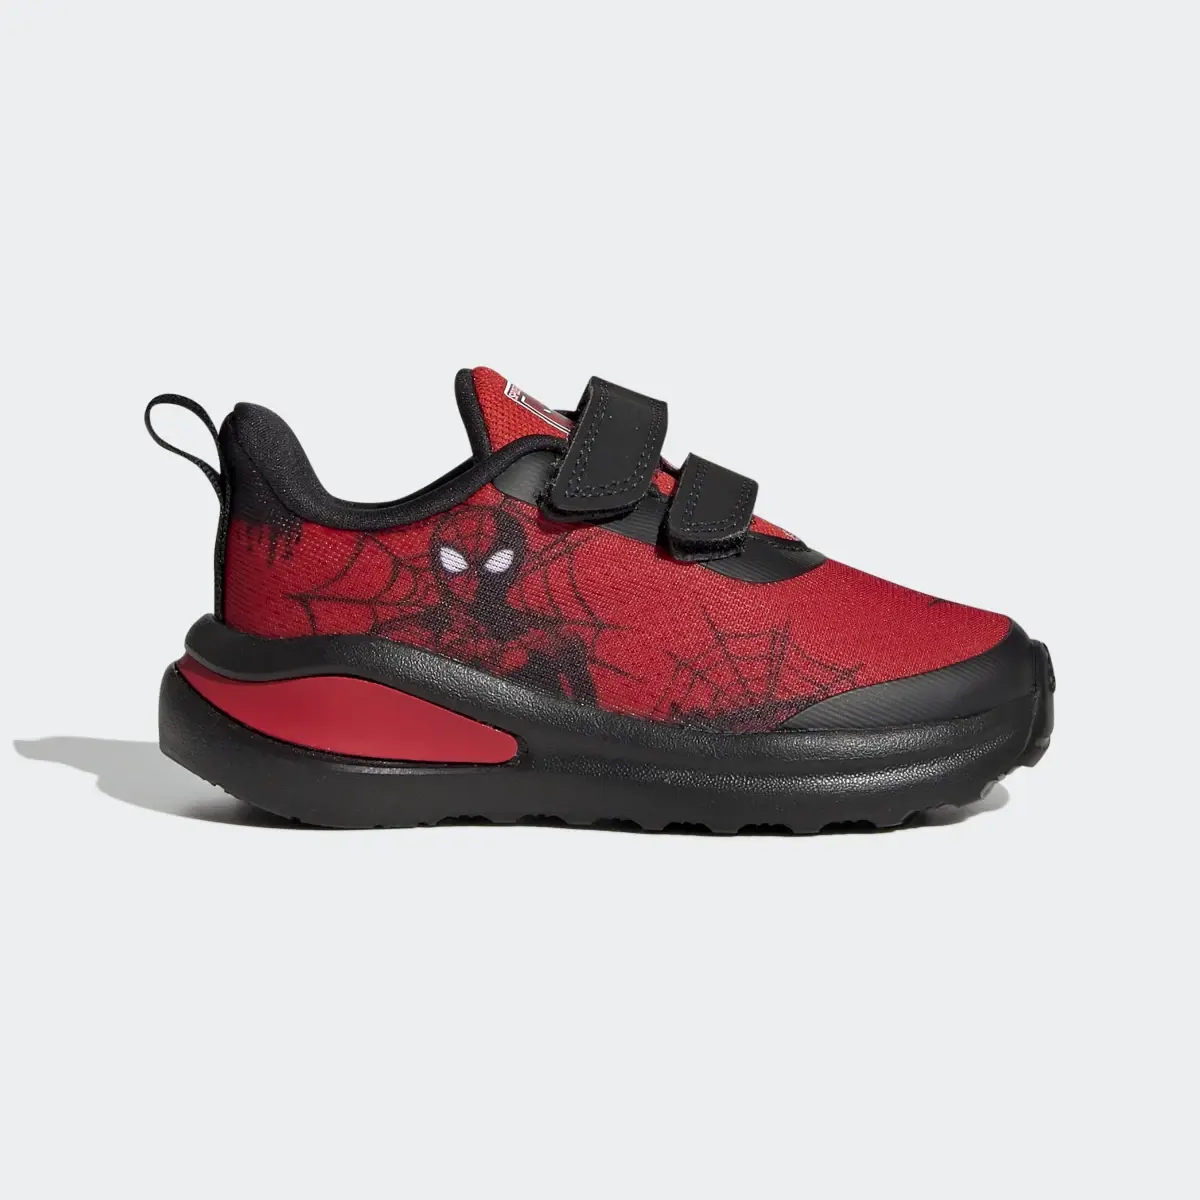 Adidas x Marvel Spider-Man Fortarun Shoes. 2